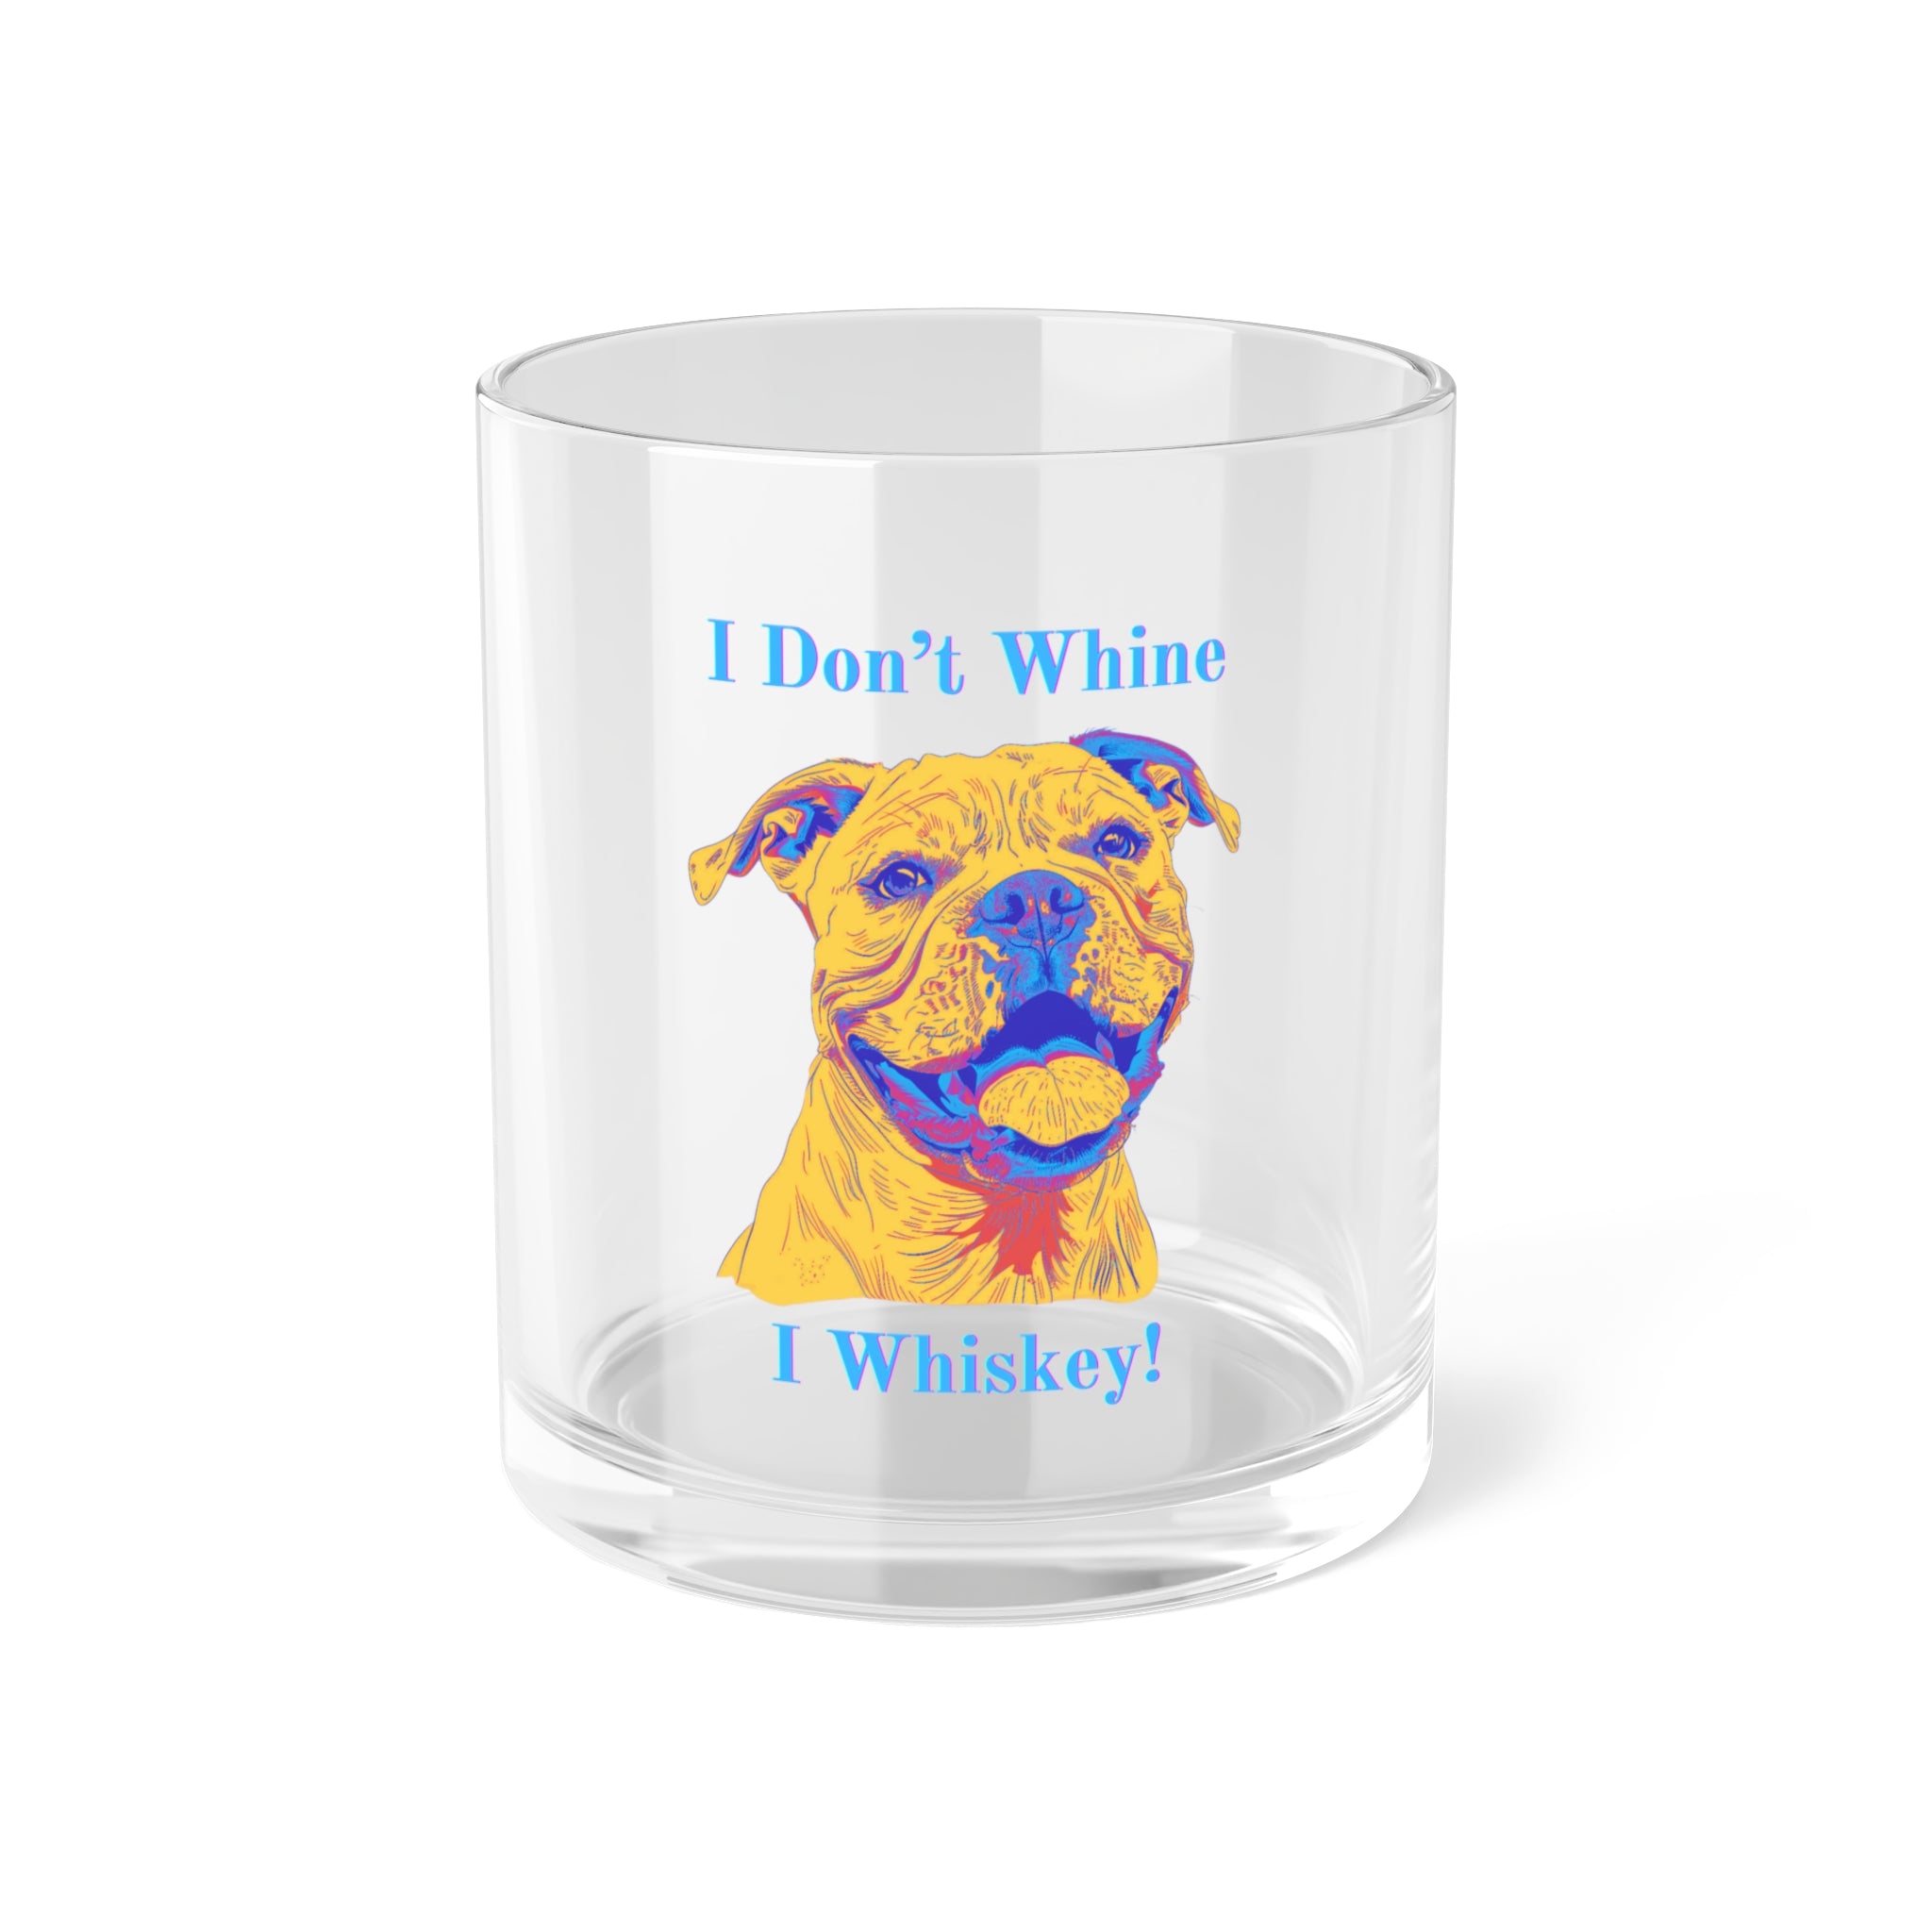 Bulldog Spirit Whiskey Glasses: "I Don't Whine, I Whiskey!" (American)